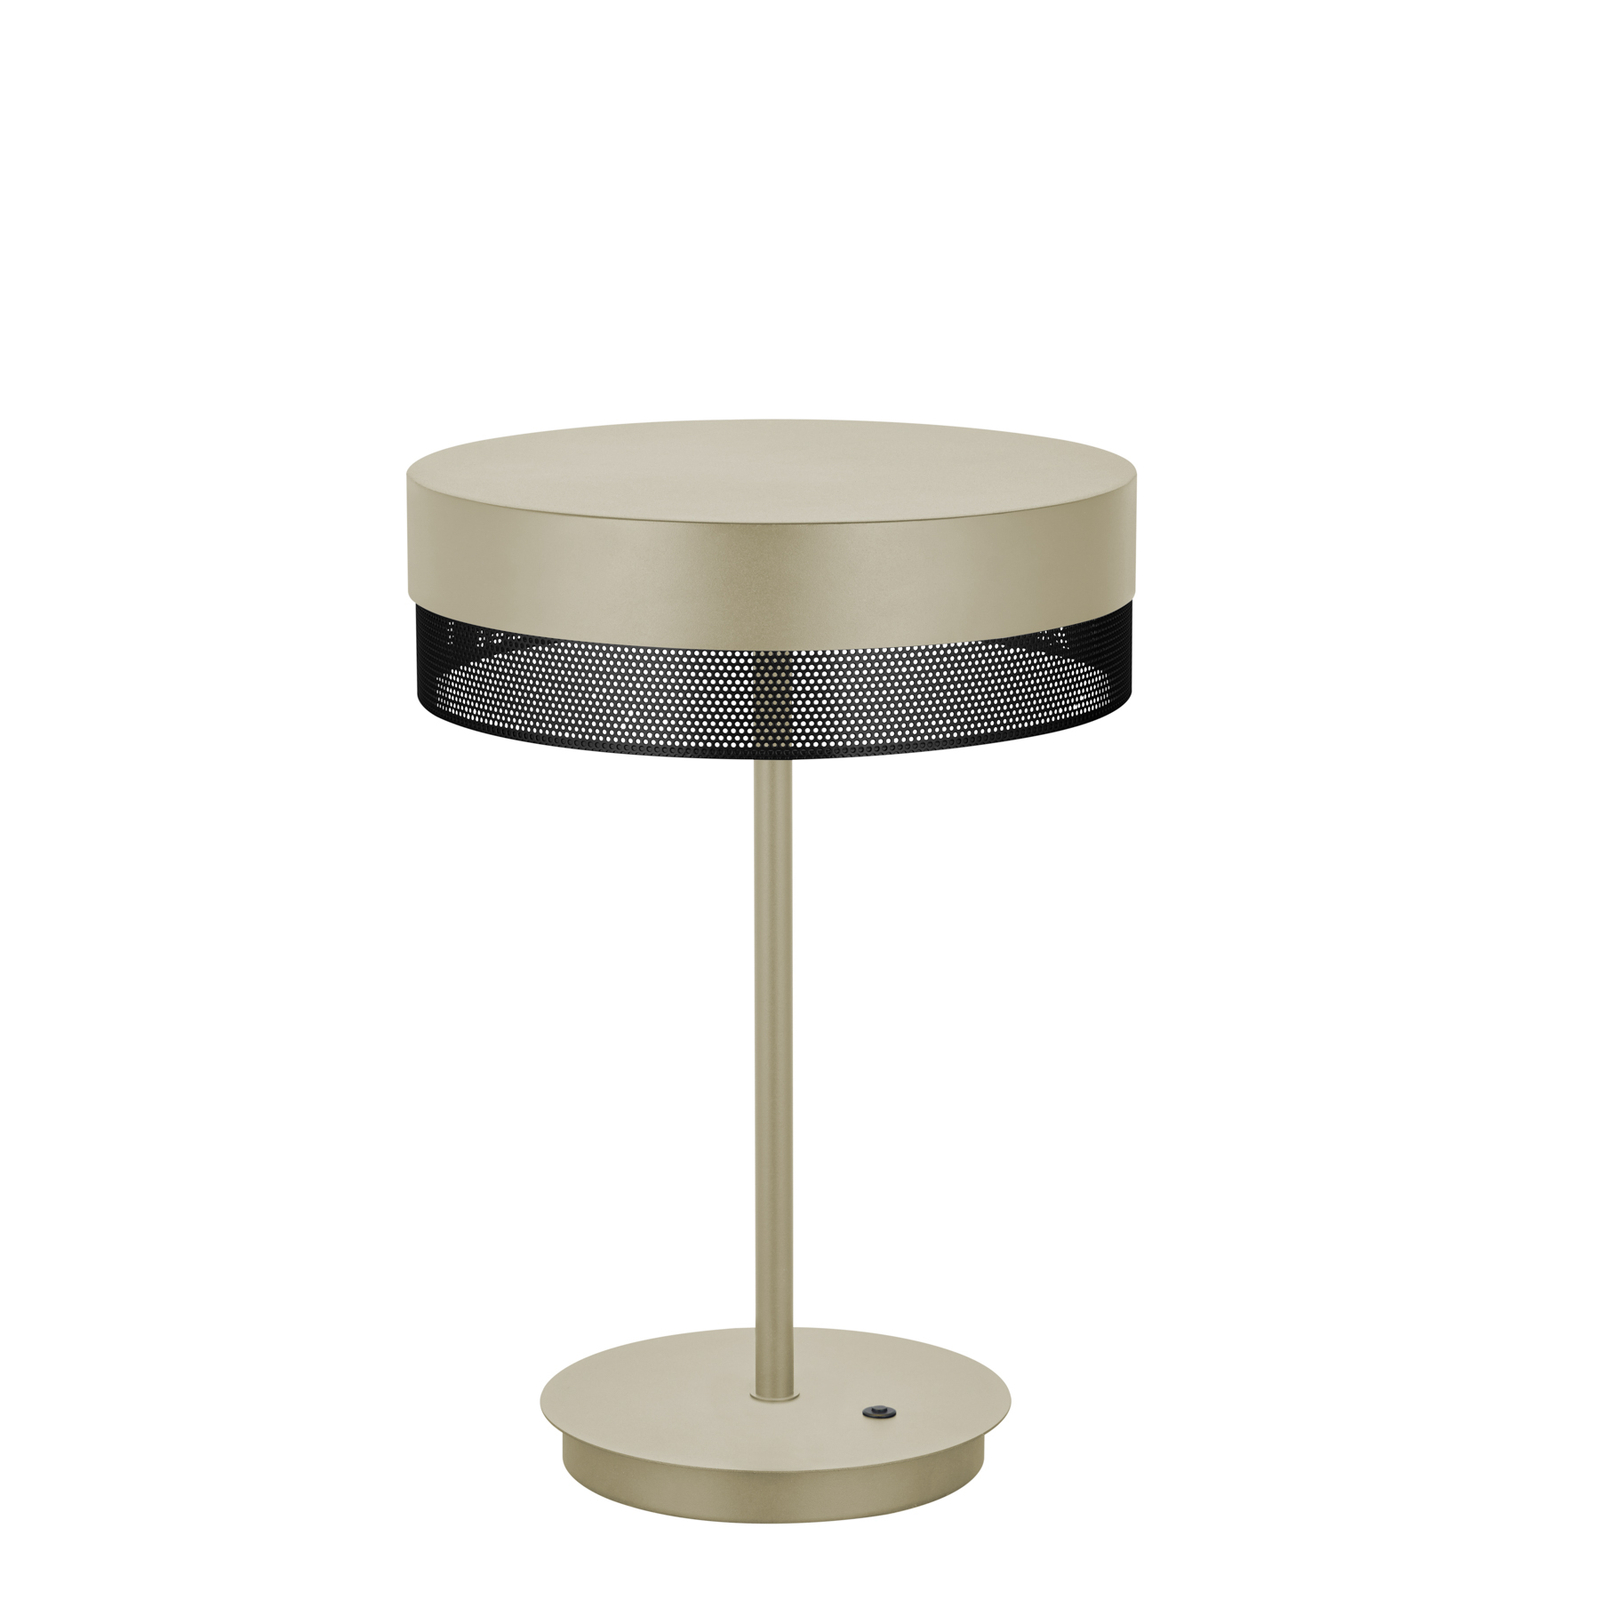 Mesh LED table lamp, 43 cm high, sand/black